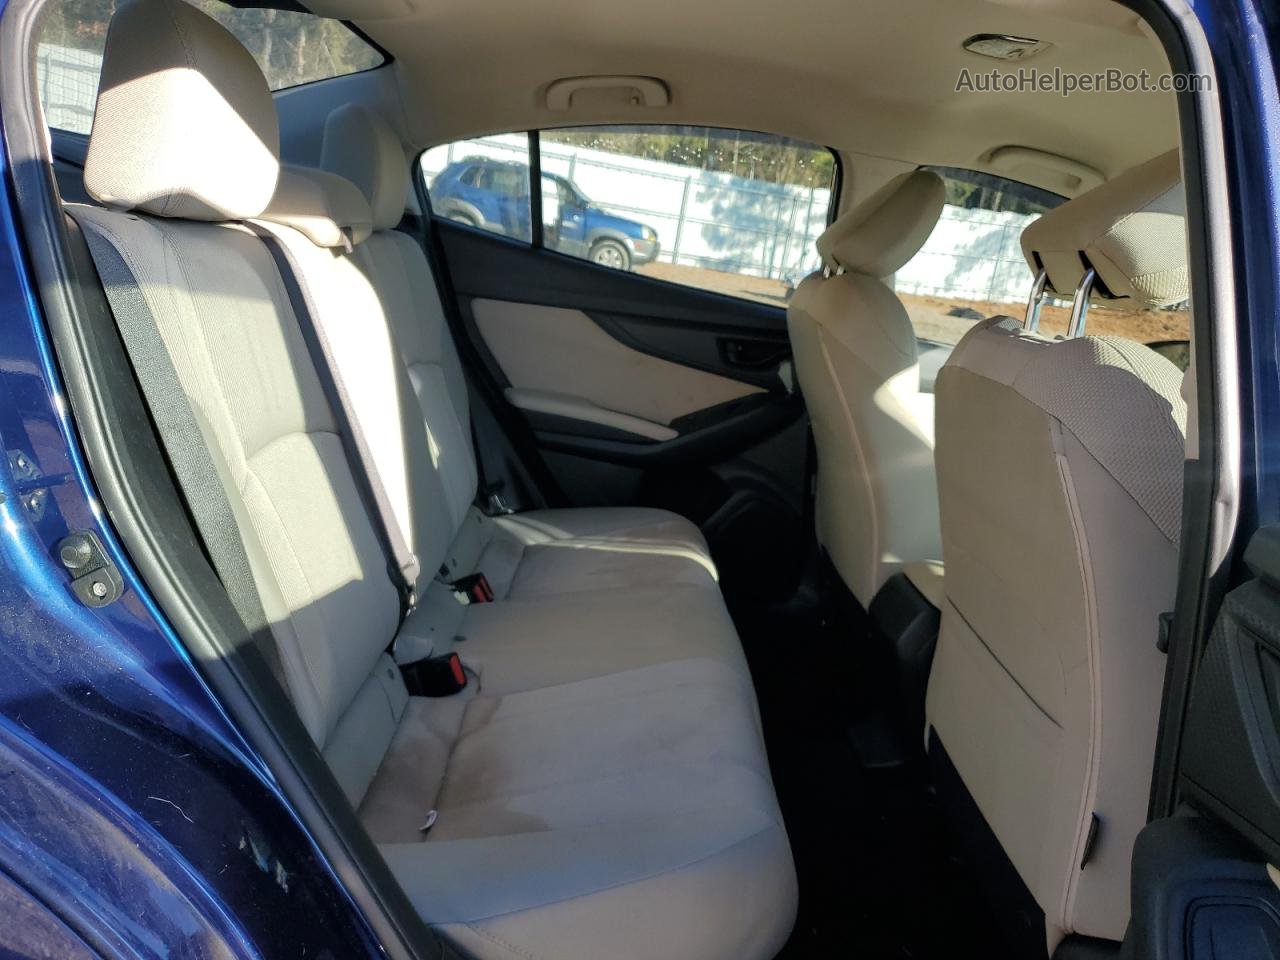 2018 Subaru Impreza  Синий vin: 4S3GKAA64J3617323